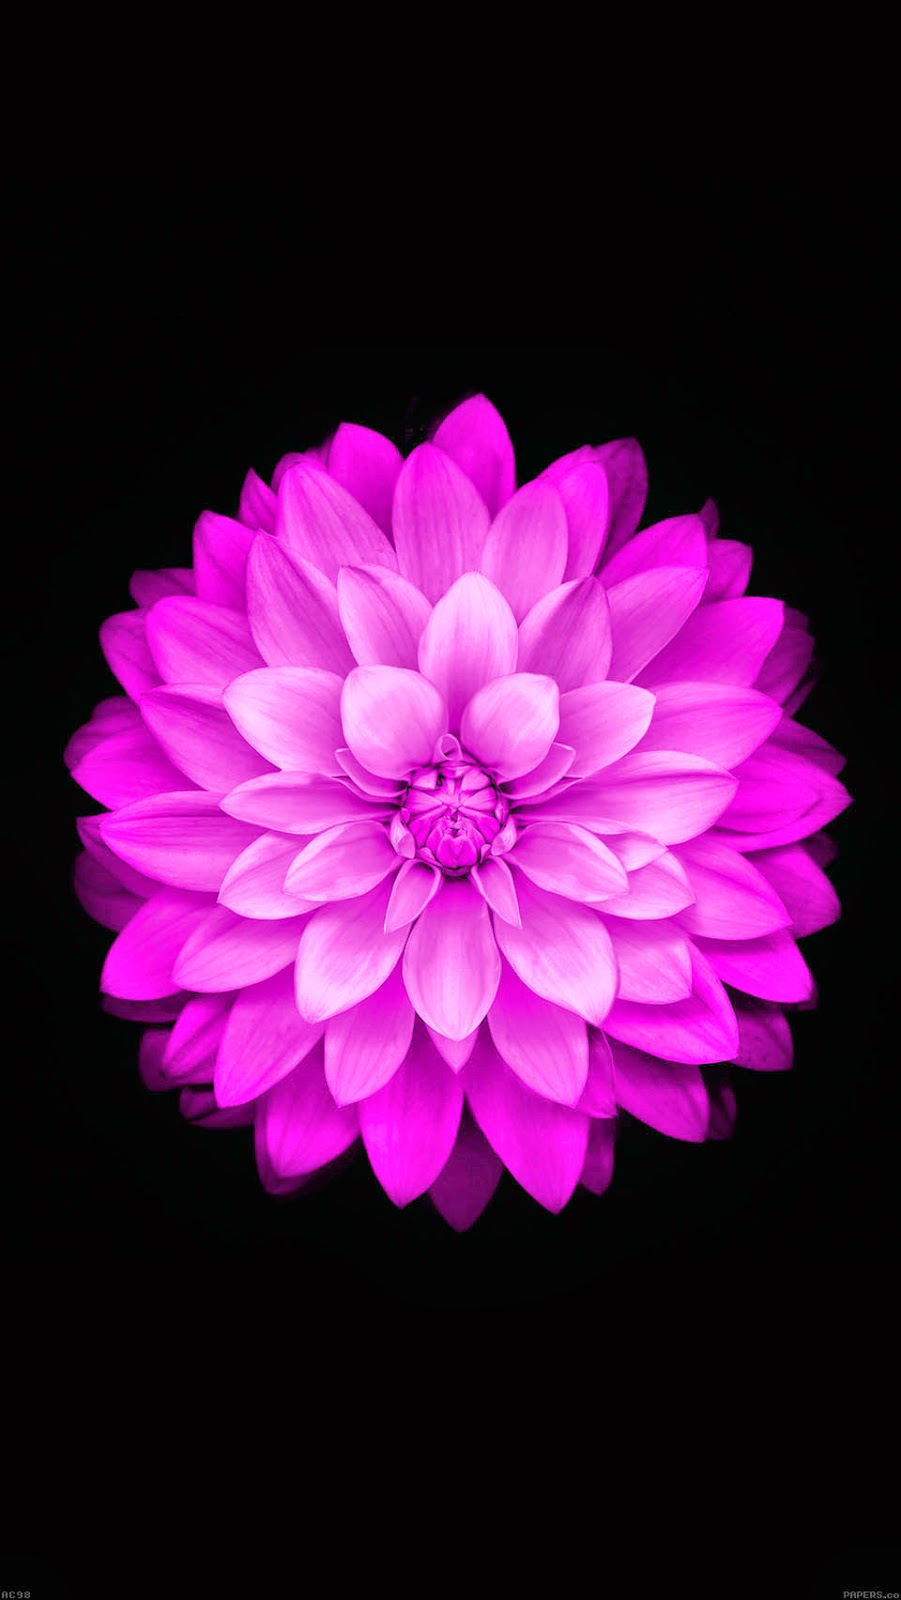 flor de loto fondo de pantalla para iphone,pétalo,rosado,violeta,flor,dalia